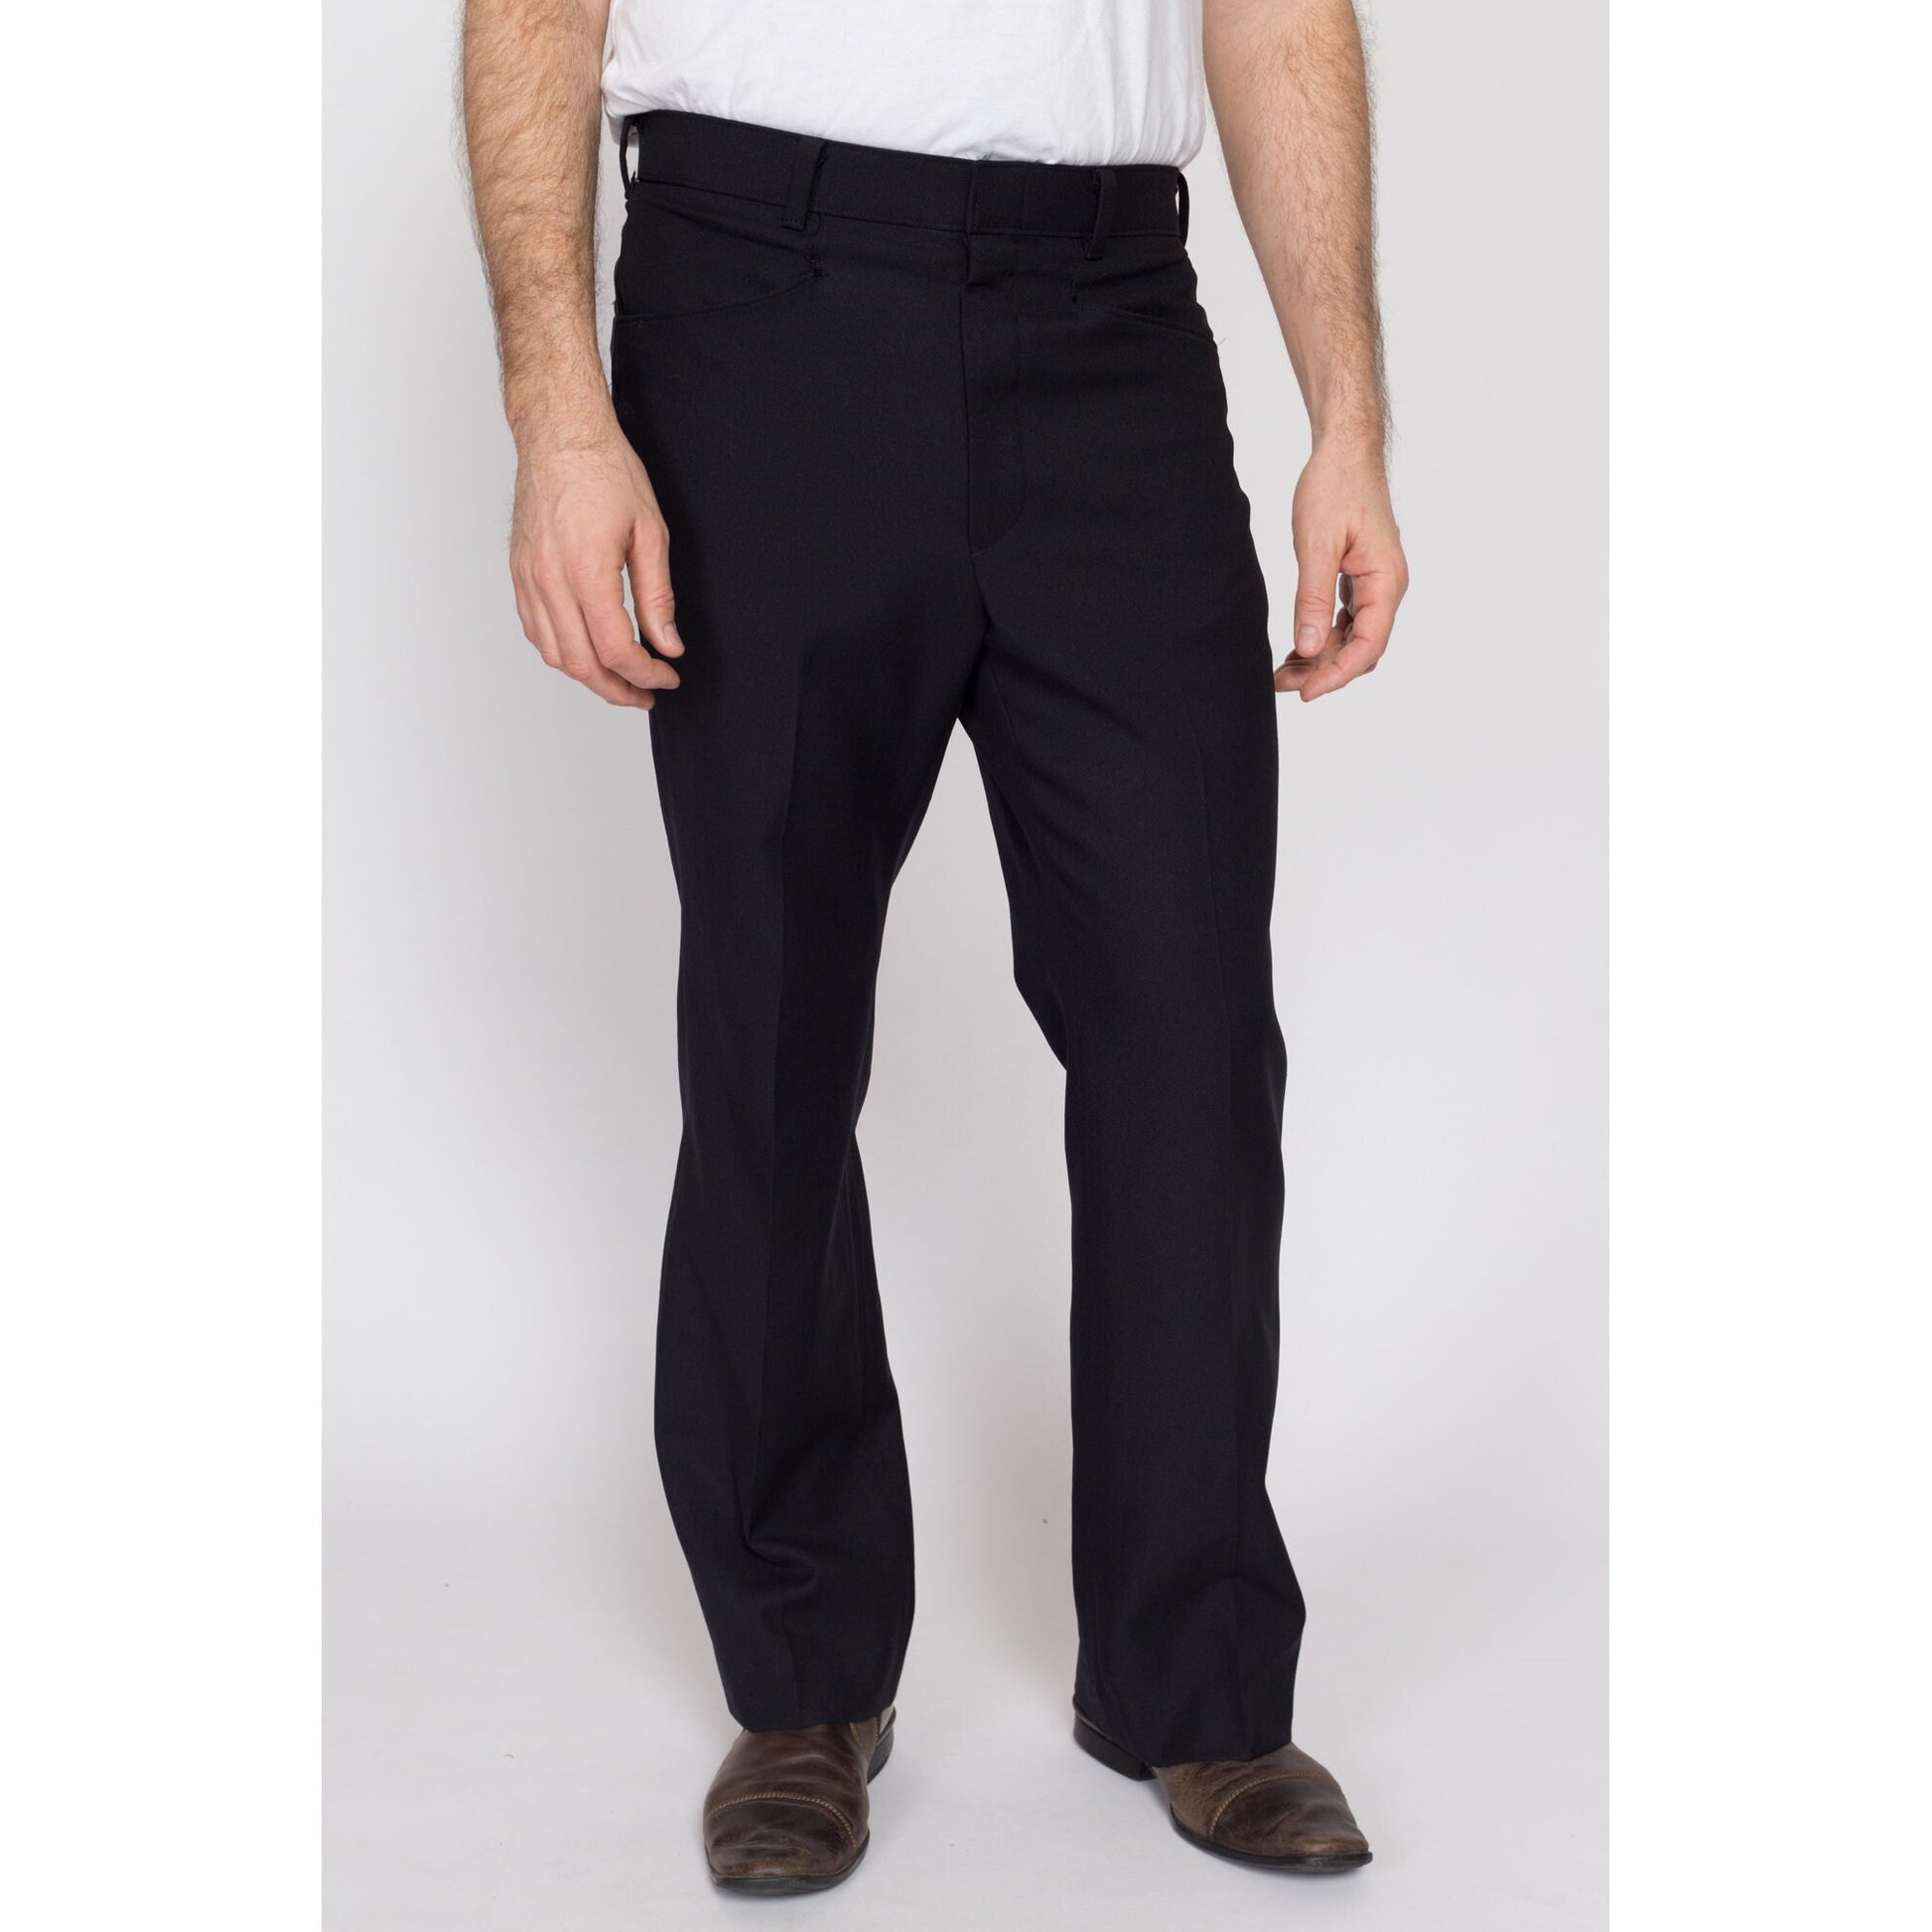 Lee Pants Trousers Size 33X30 Straight Leg Flat Front Black Mens Classic Fit